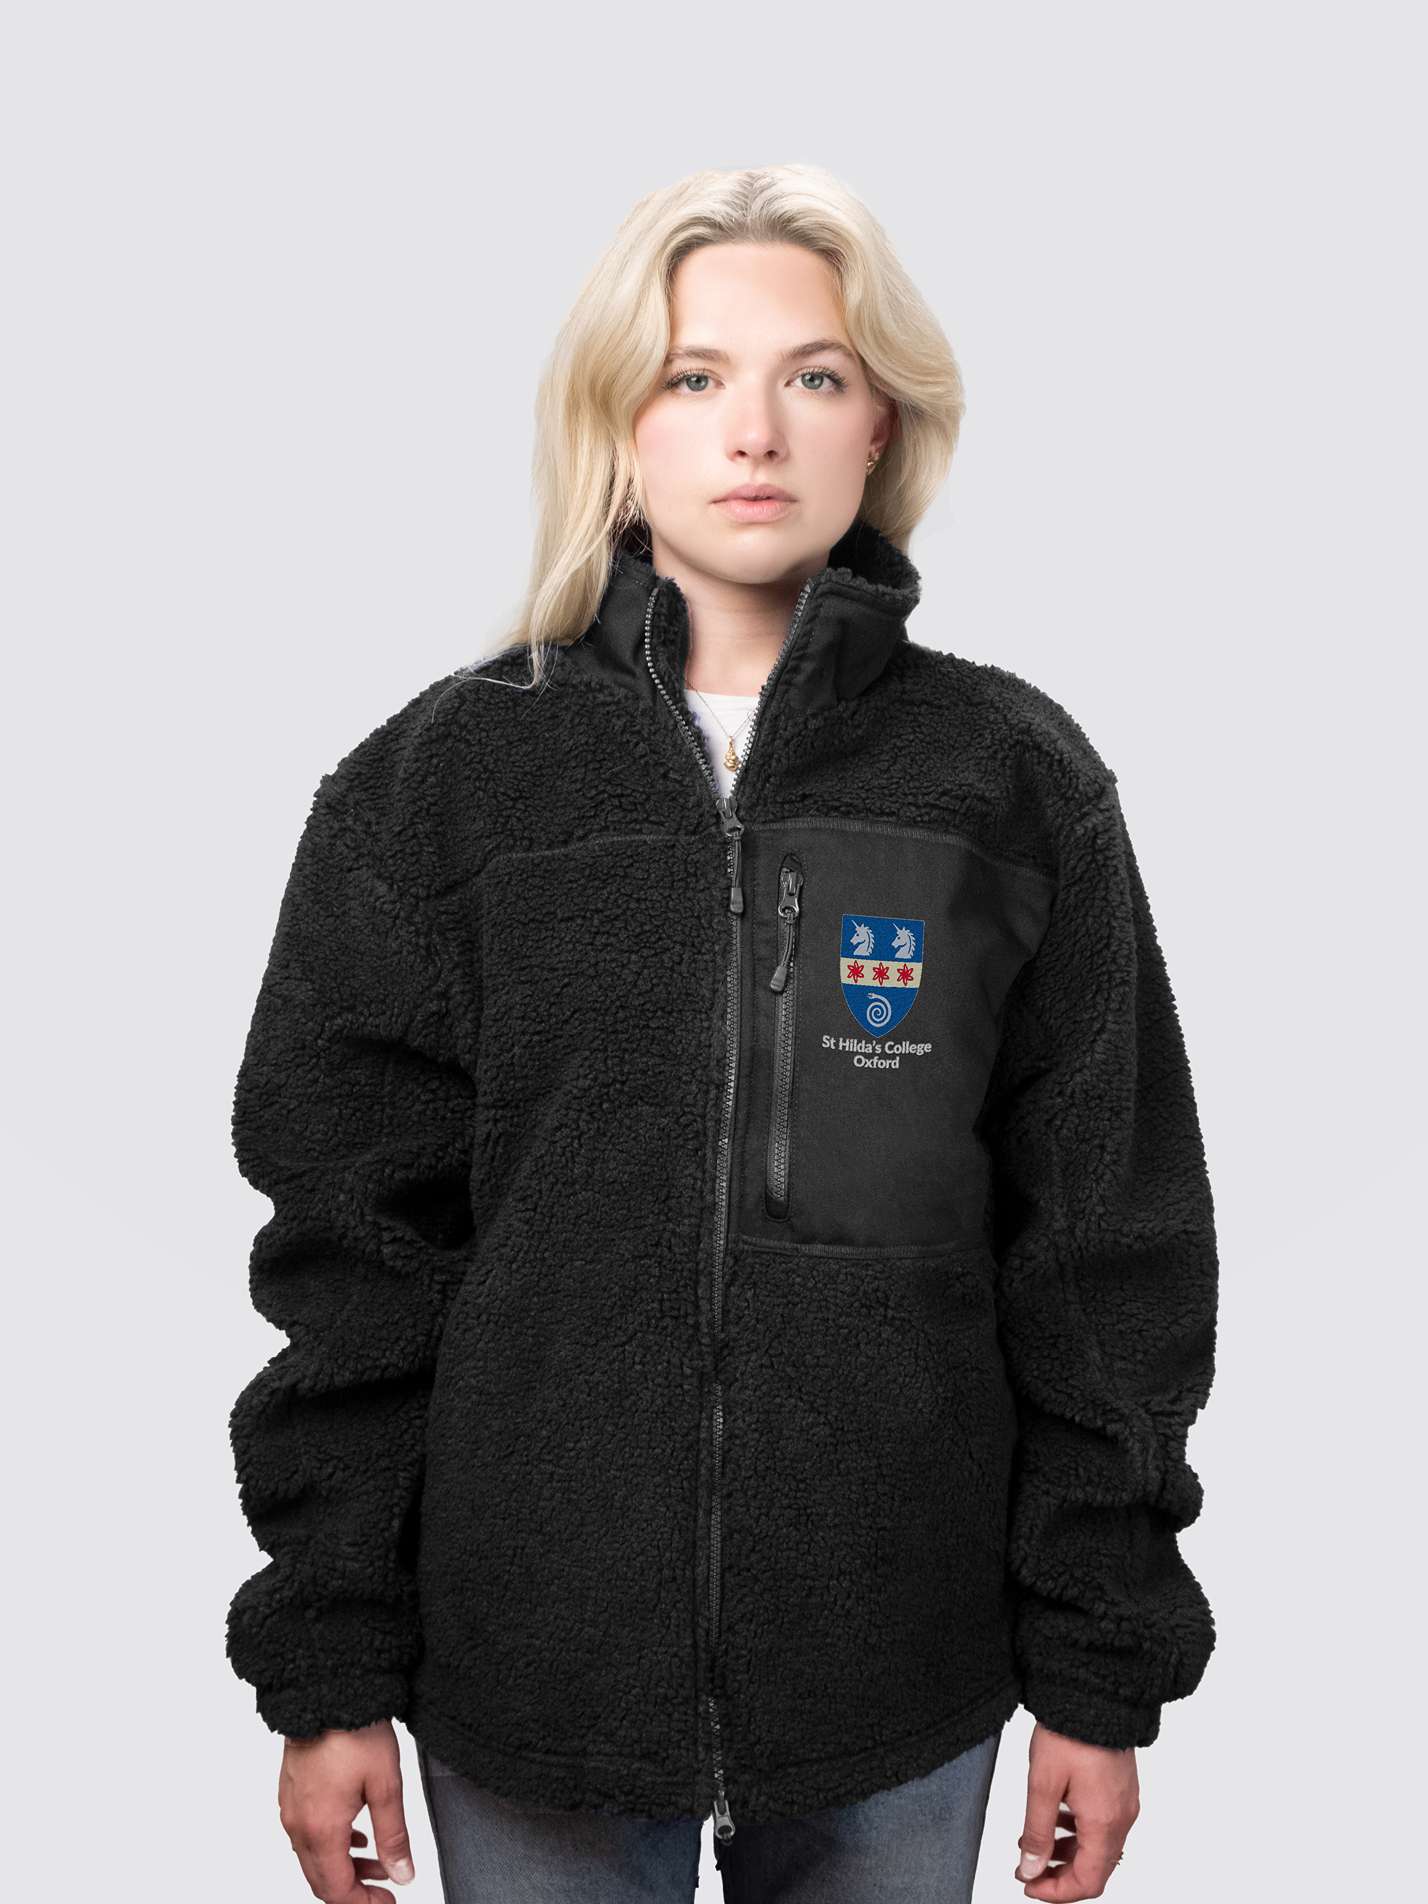 St Hilda's College Oxford Unisex Fluffy Sherpa Fleece Jacket